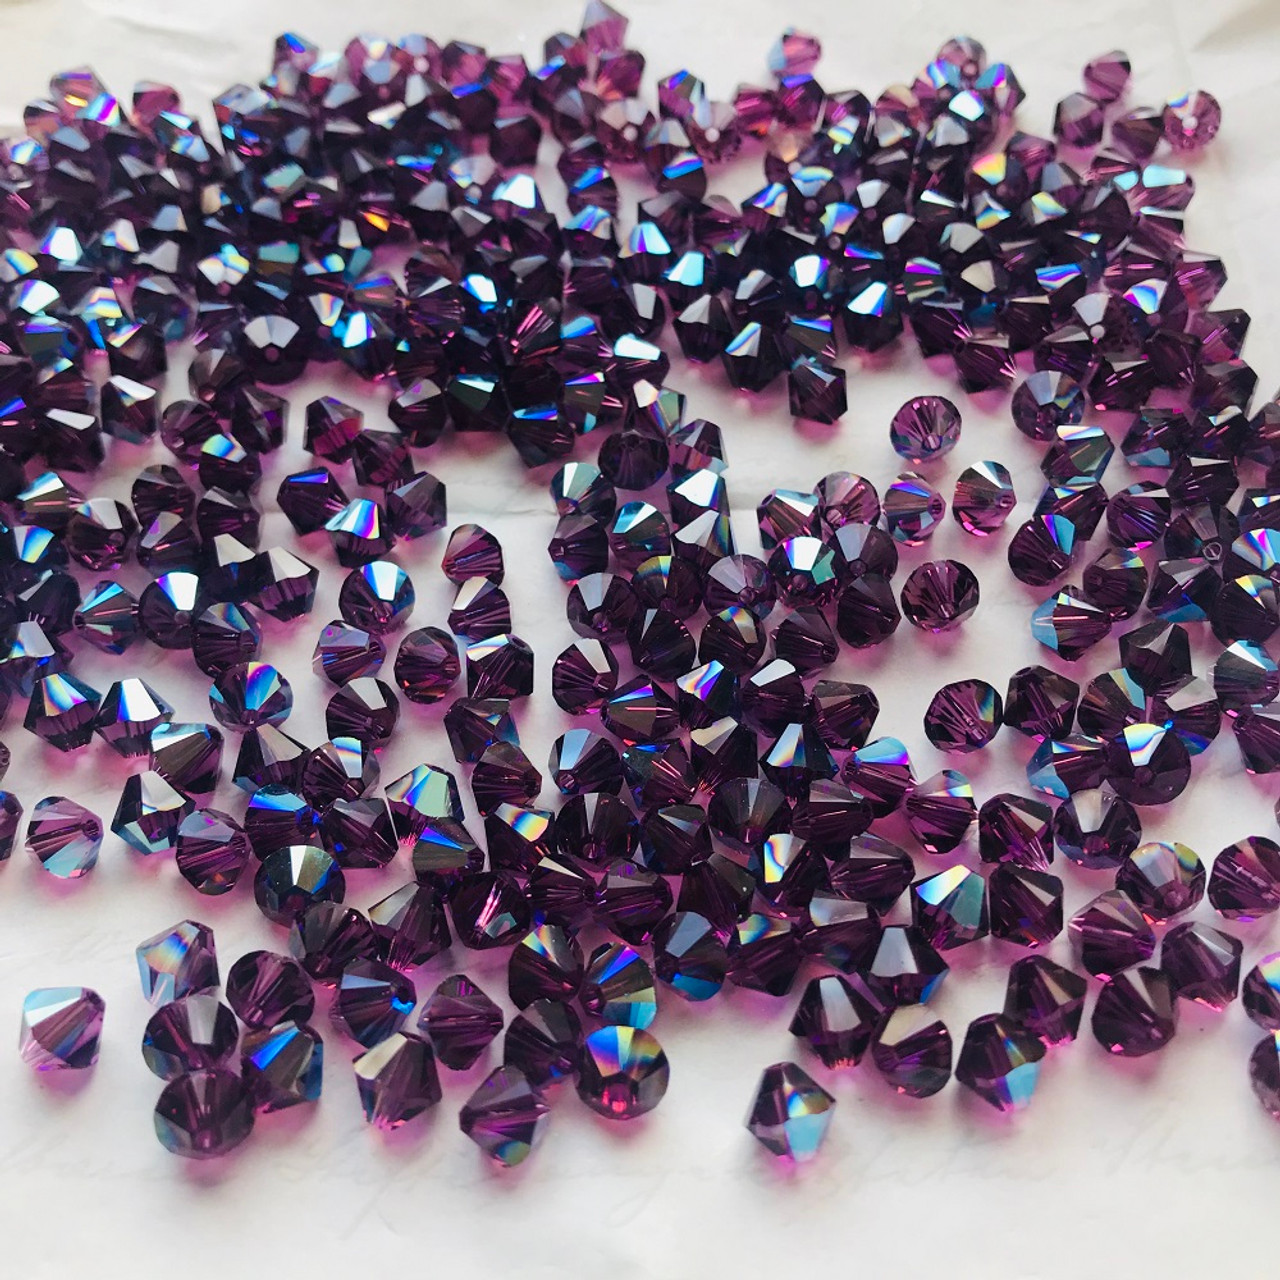 Swarovski 5328 6mm Xilion Bicone Beads Amethyst Shimmer (36 Pieces)